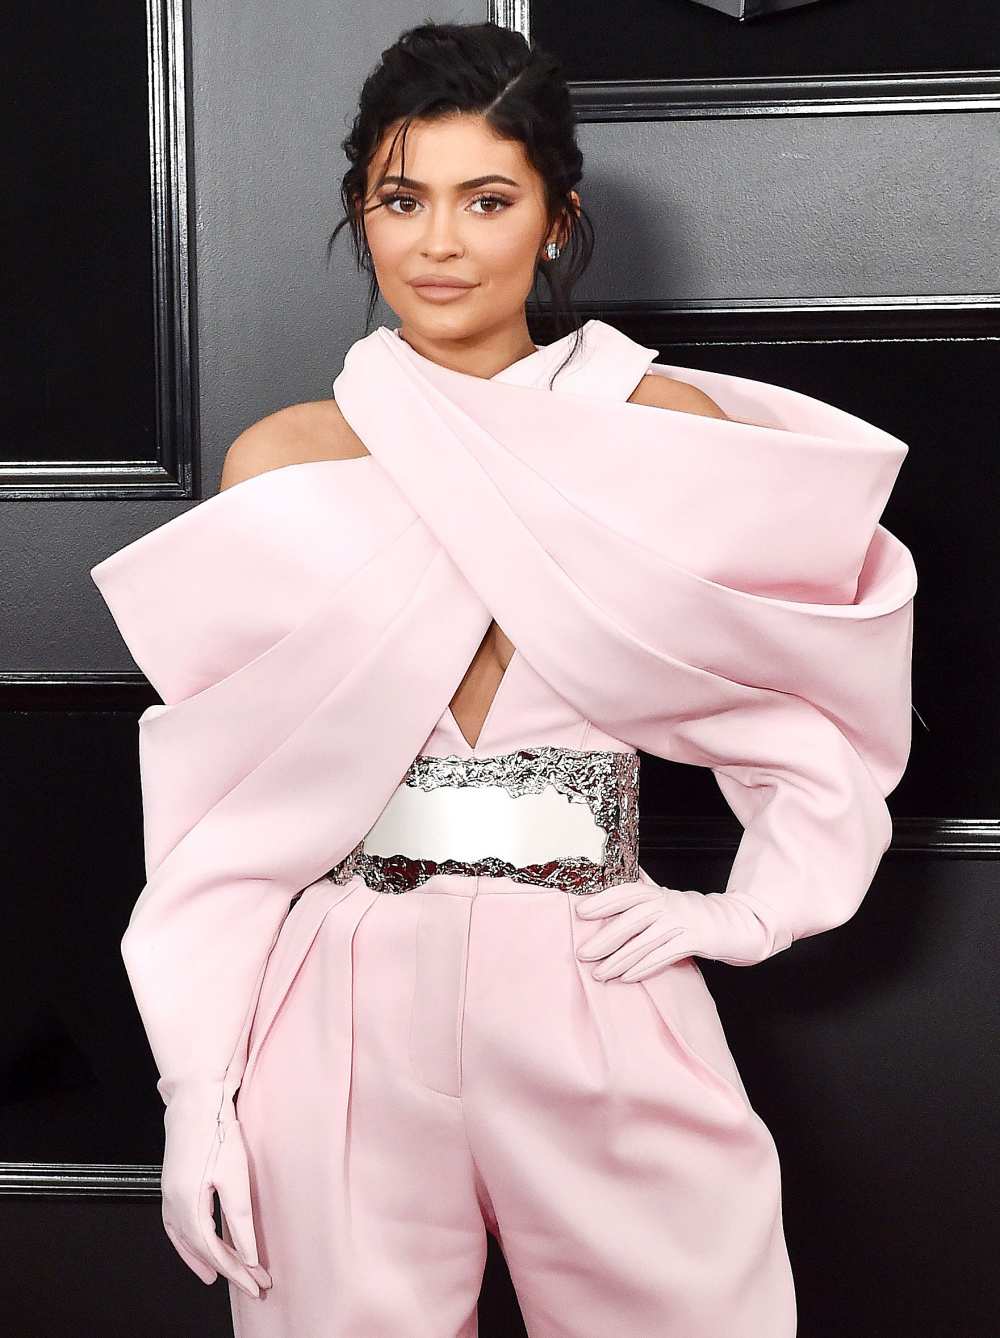 Kylie Jenner Balmain Grammys 2019 February 10, 2019